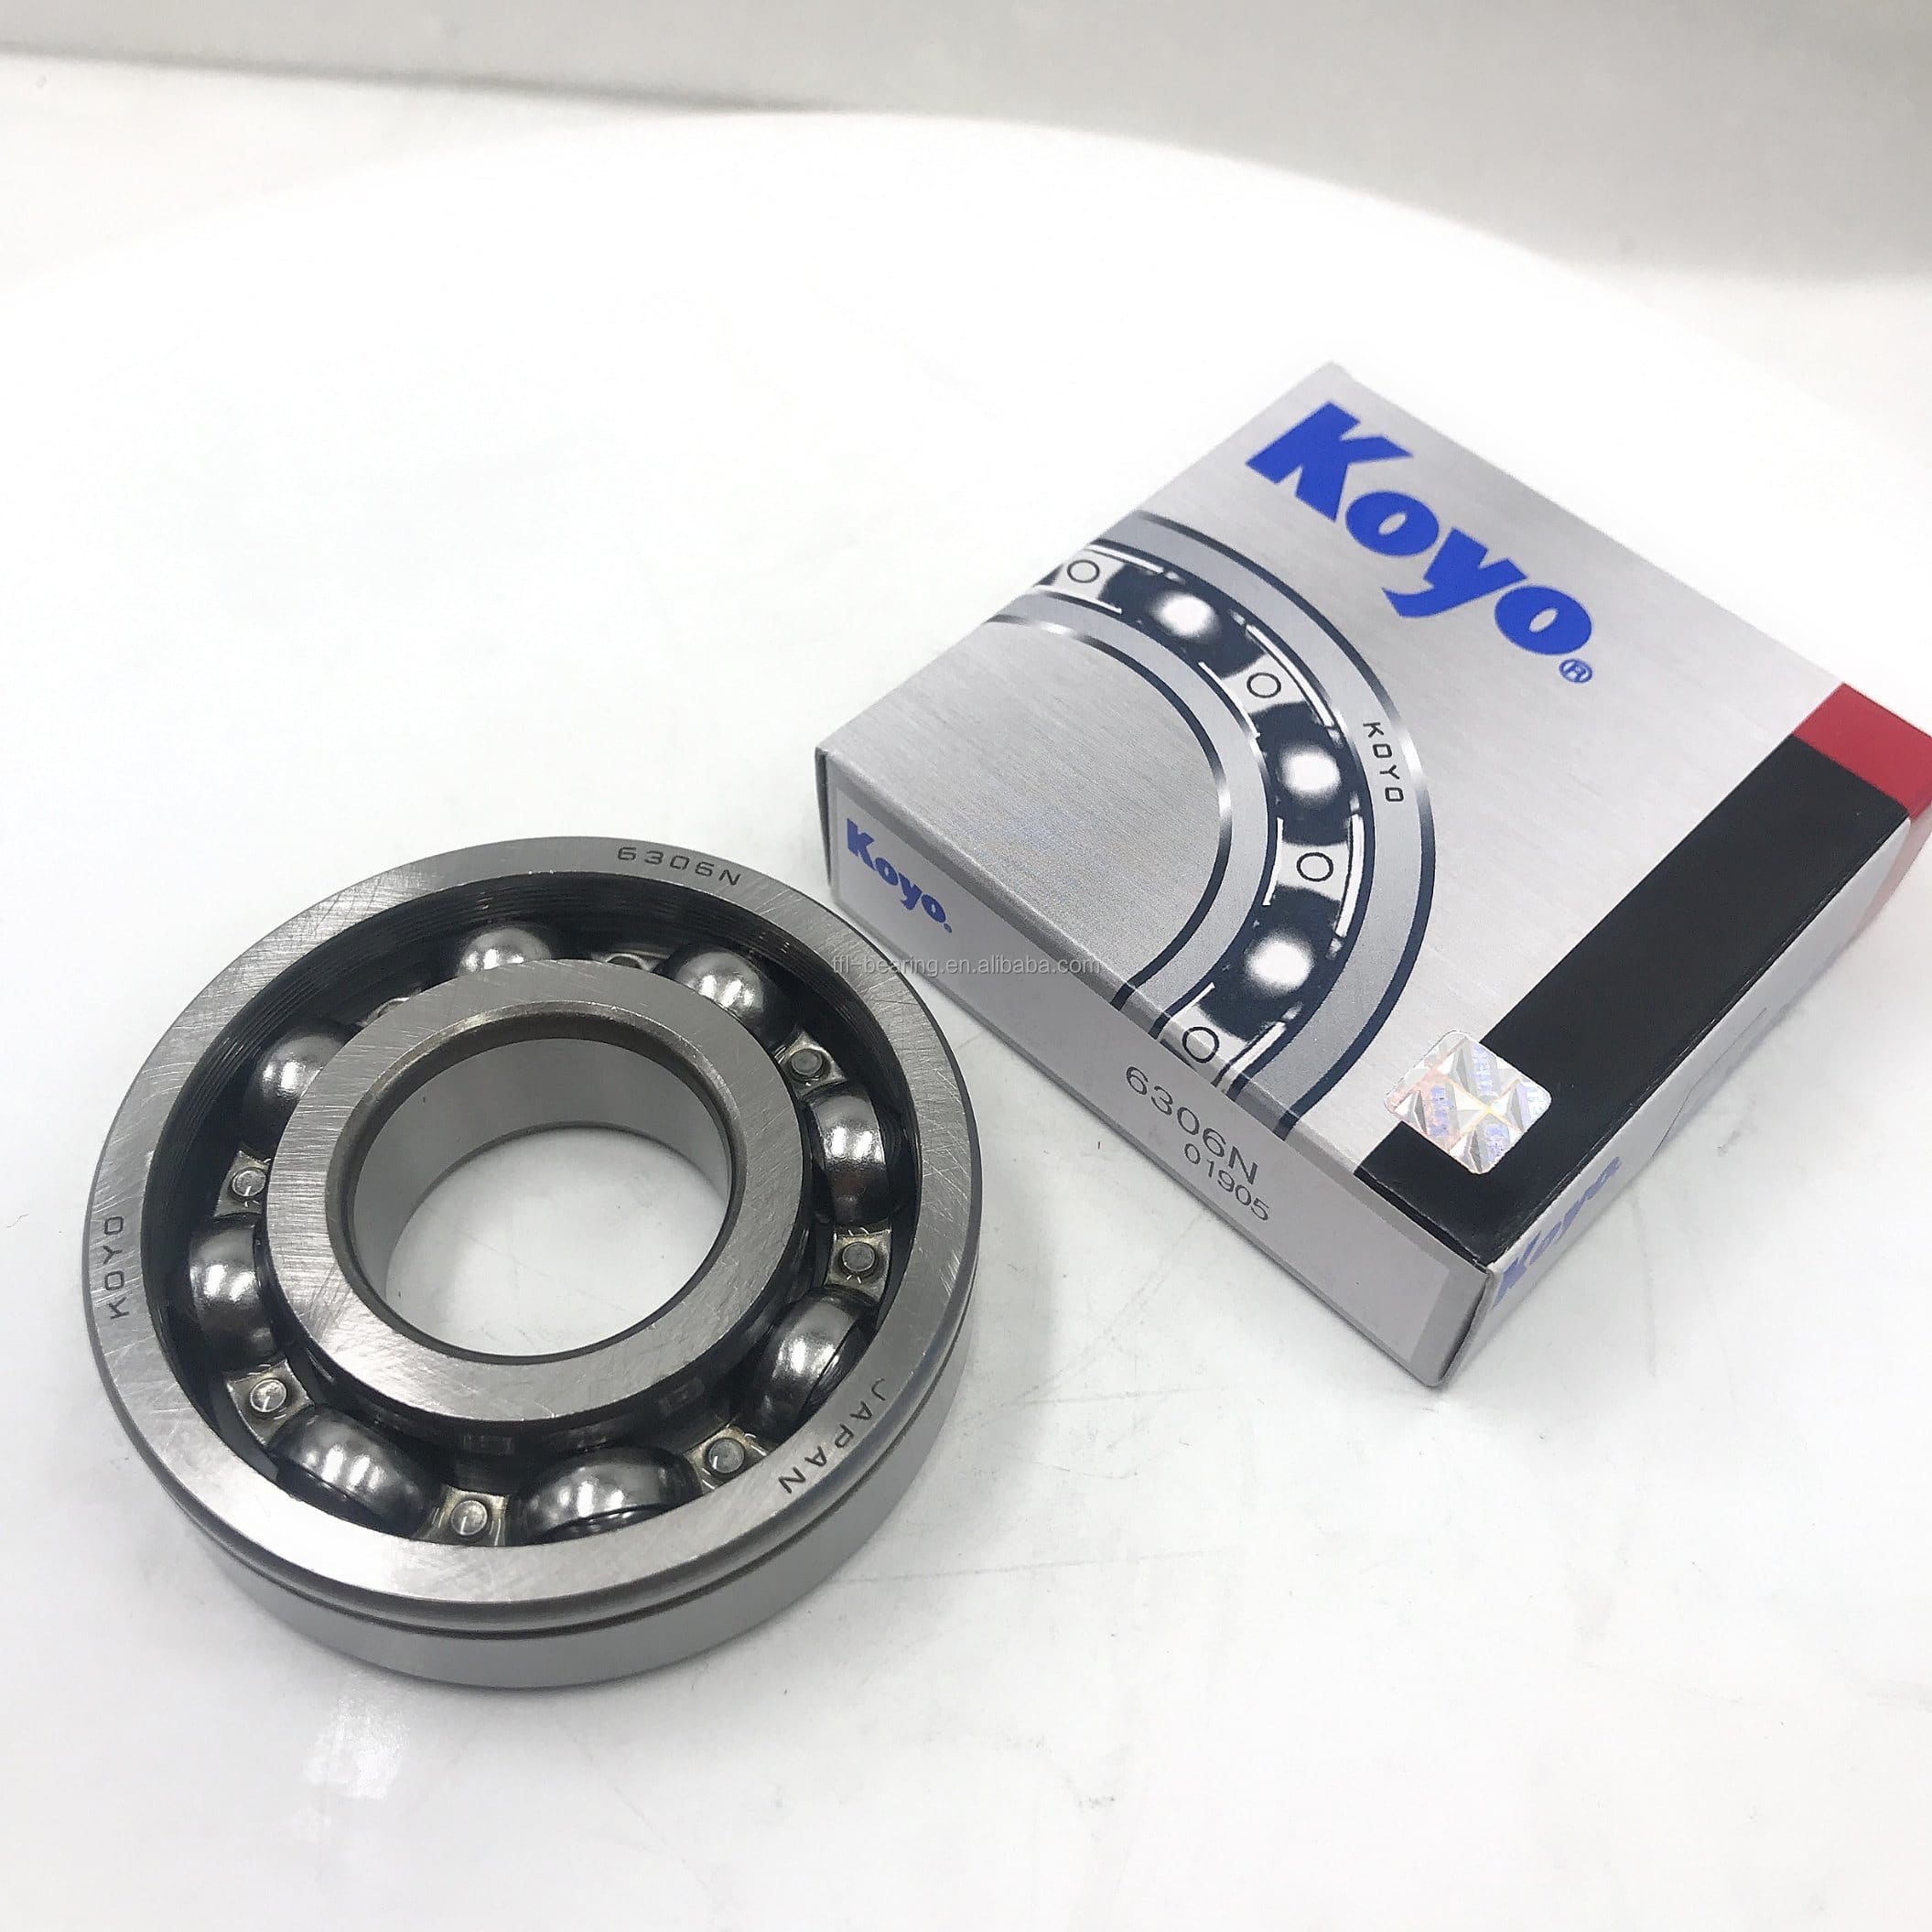 Original Japan 60/22 60/28 60/32 62/22 62/28 62/32 63/22 63/28 RS Koyo ball bearing